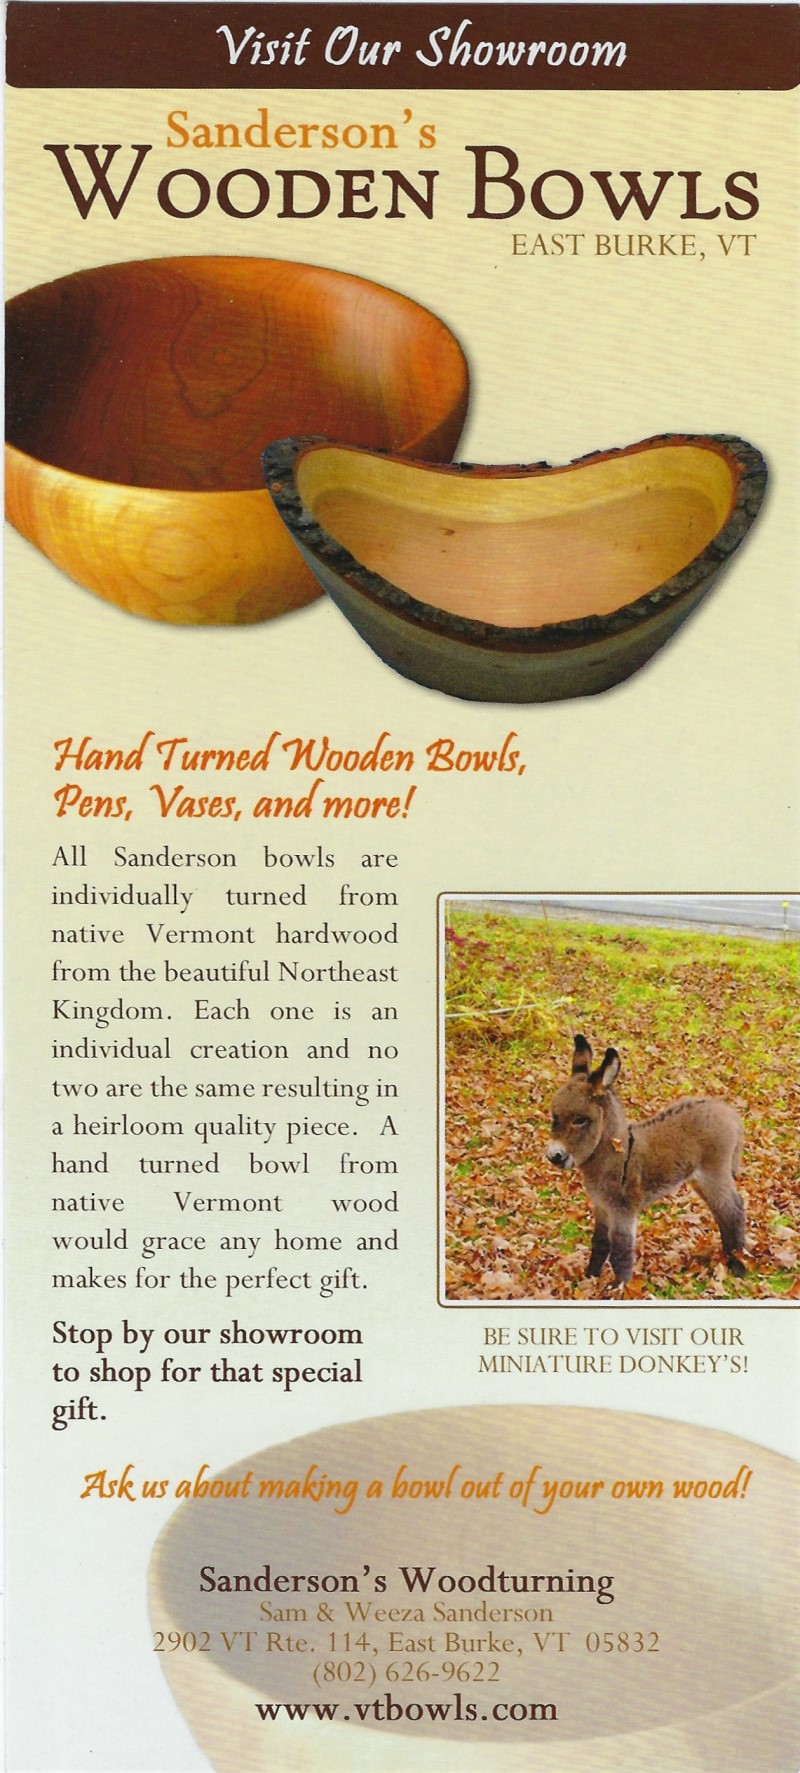 Sanderson's Wooden Bowls brochure thumbnail